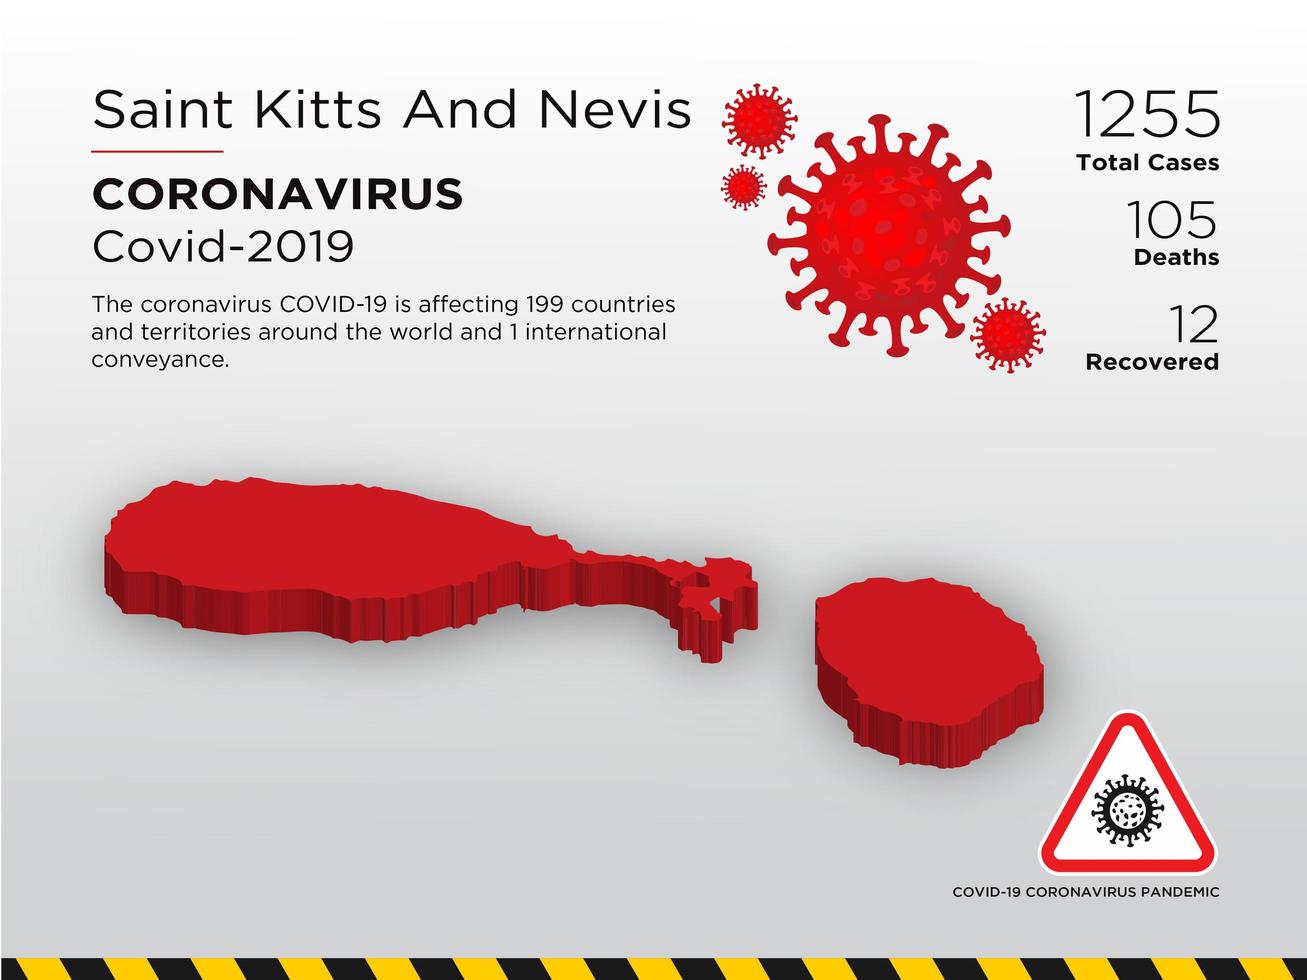 saint kitts e nevis afetaram o país mapa de coronavírus vetor